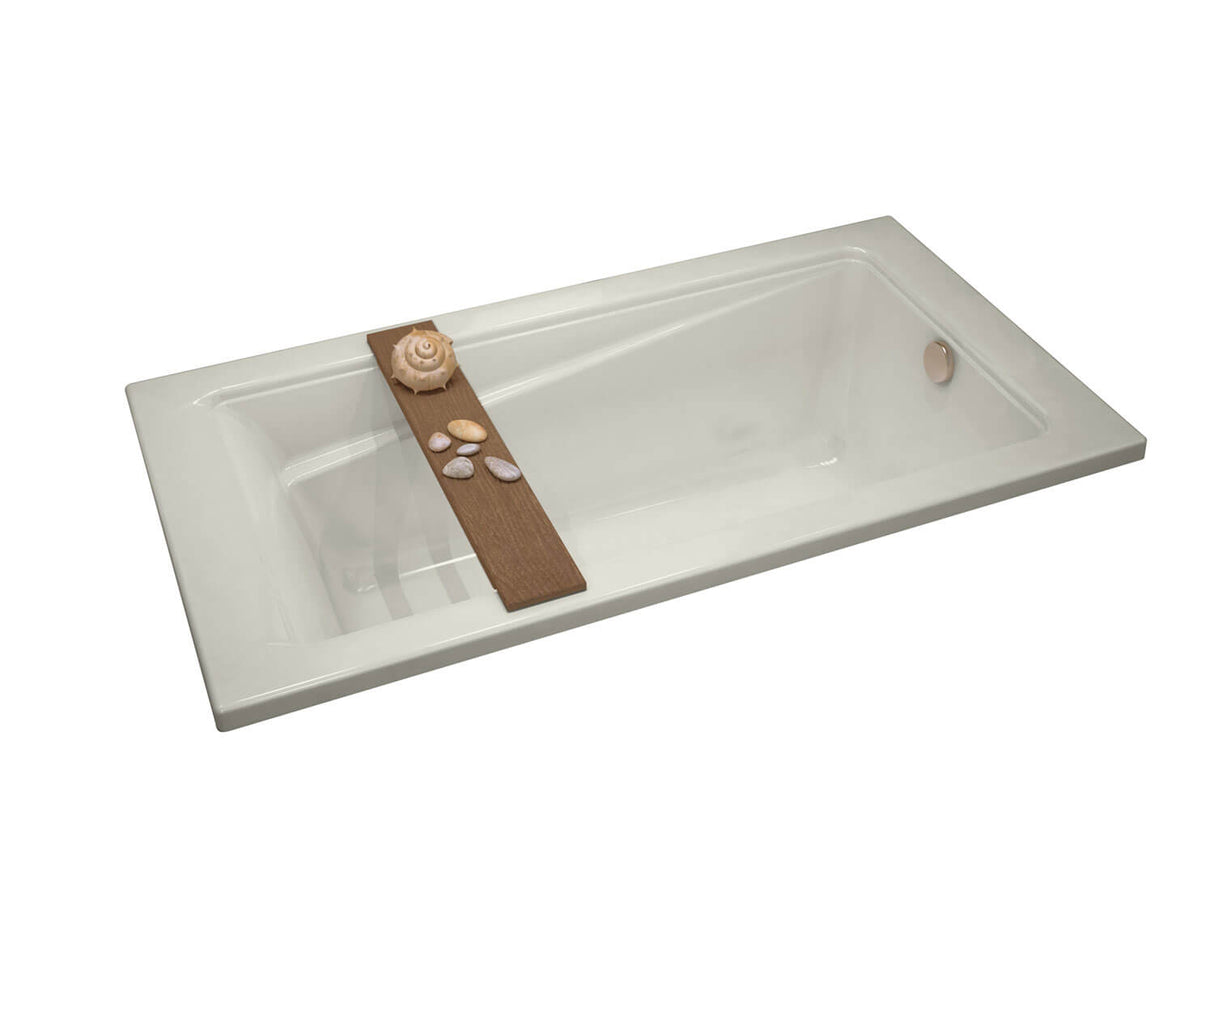 MAAX 105513-003-007-000 Exhibit 6032 Acrylic Drop-in End Drain Whirlpool Bathtub in Biscuit